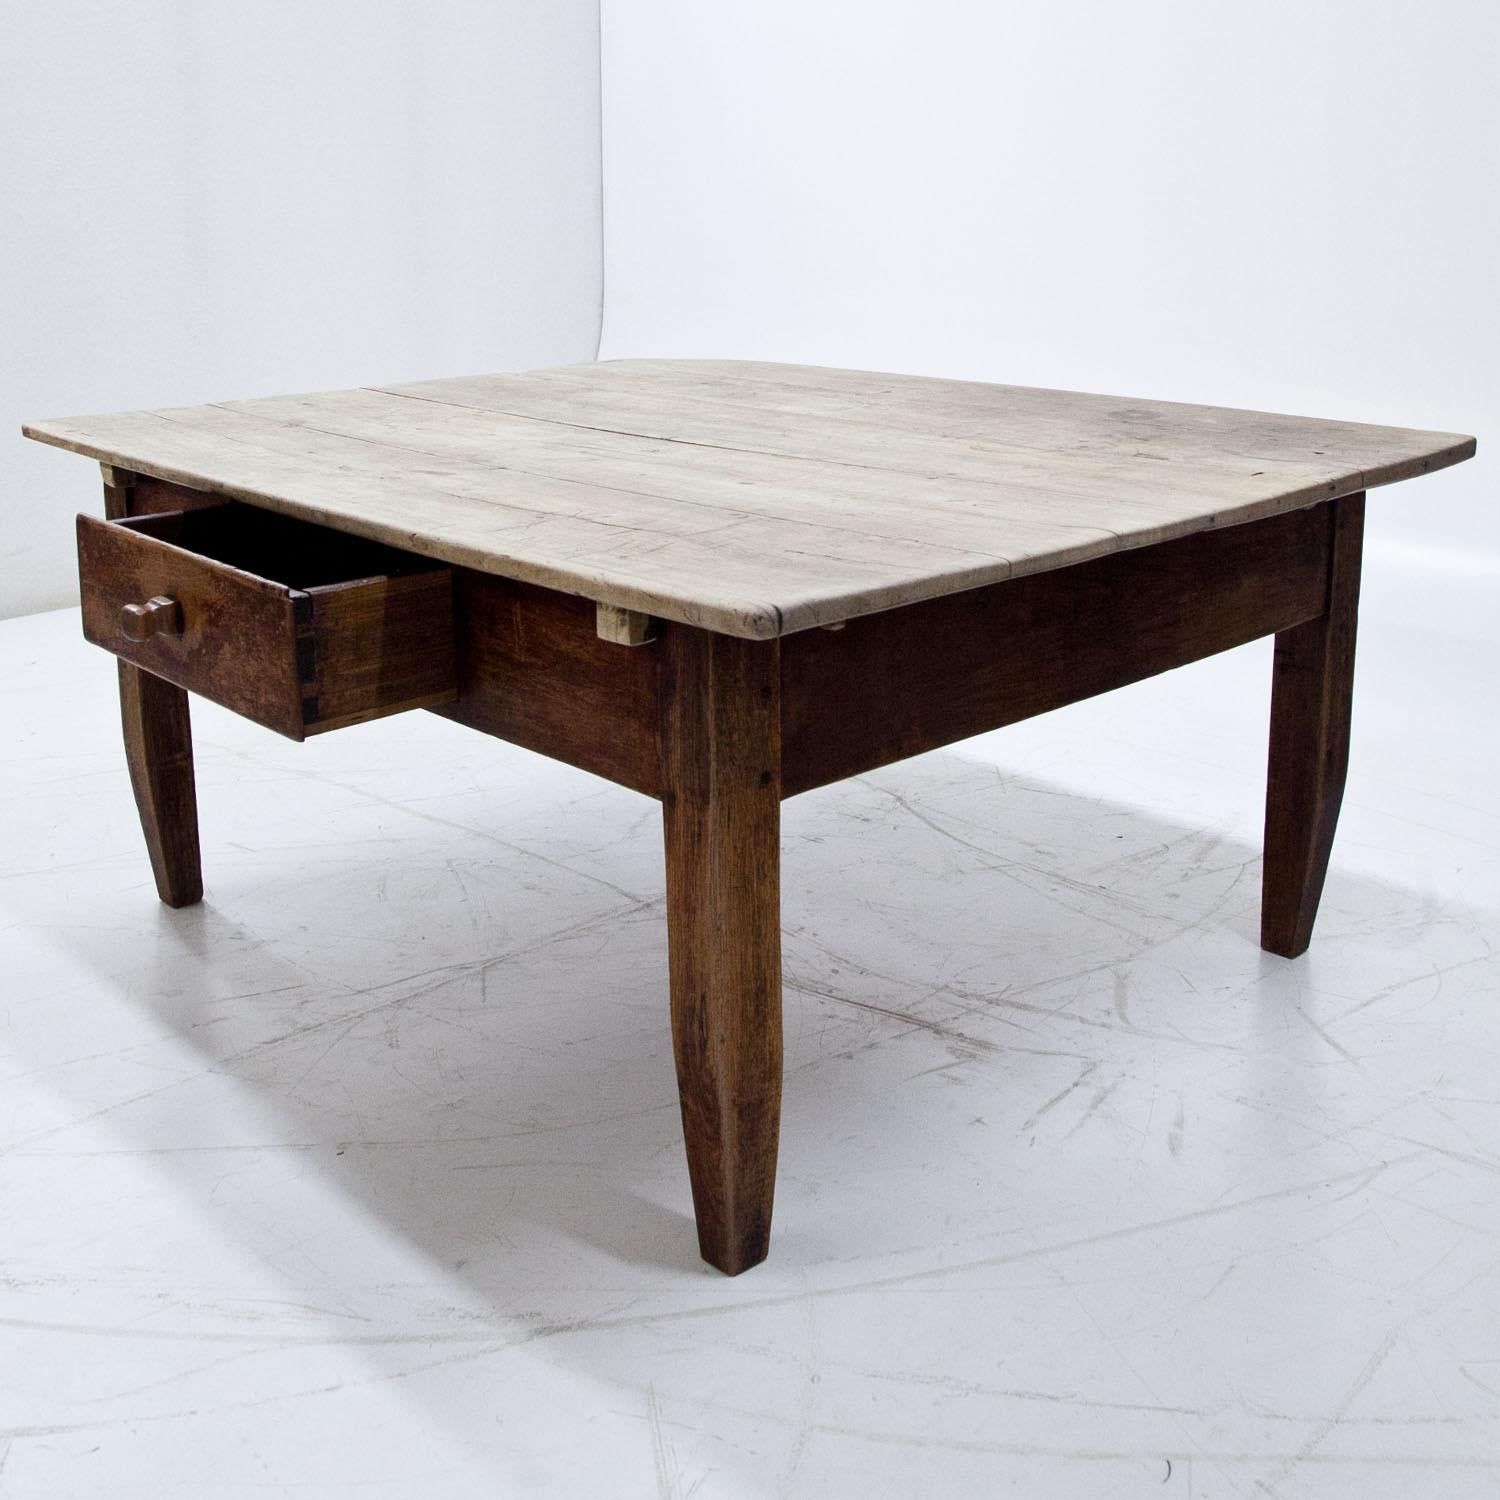 Maple Coffee Table, circa 1820